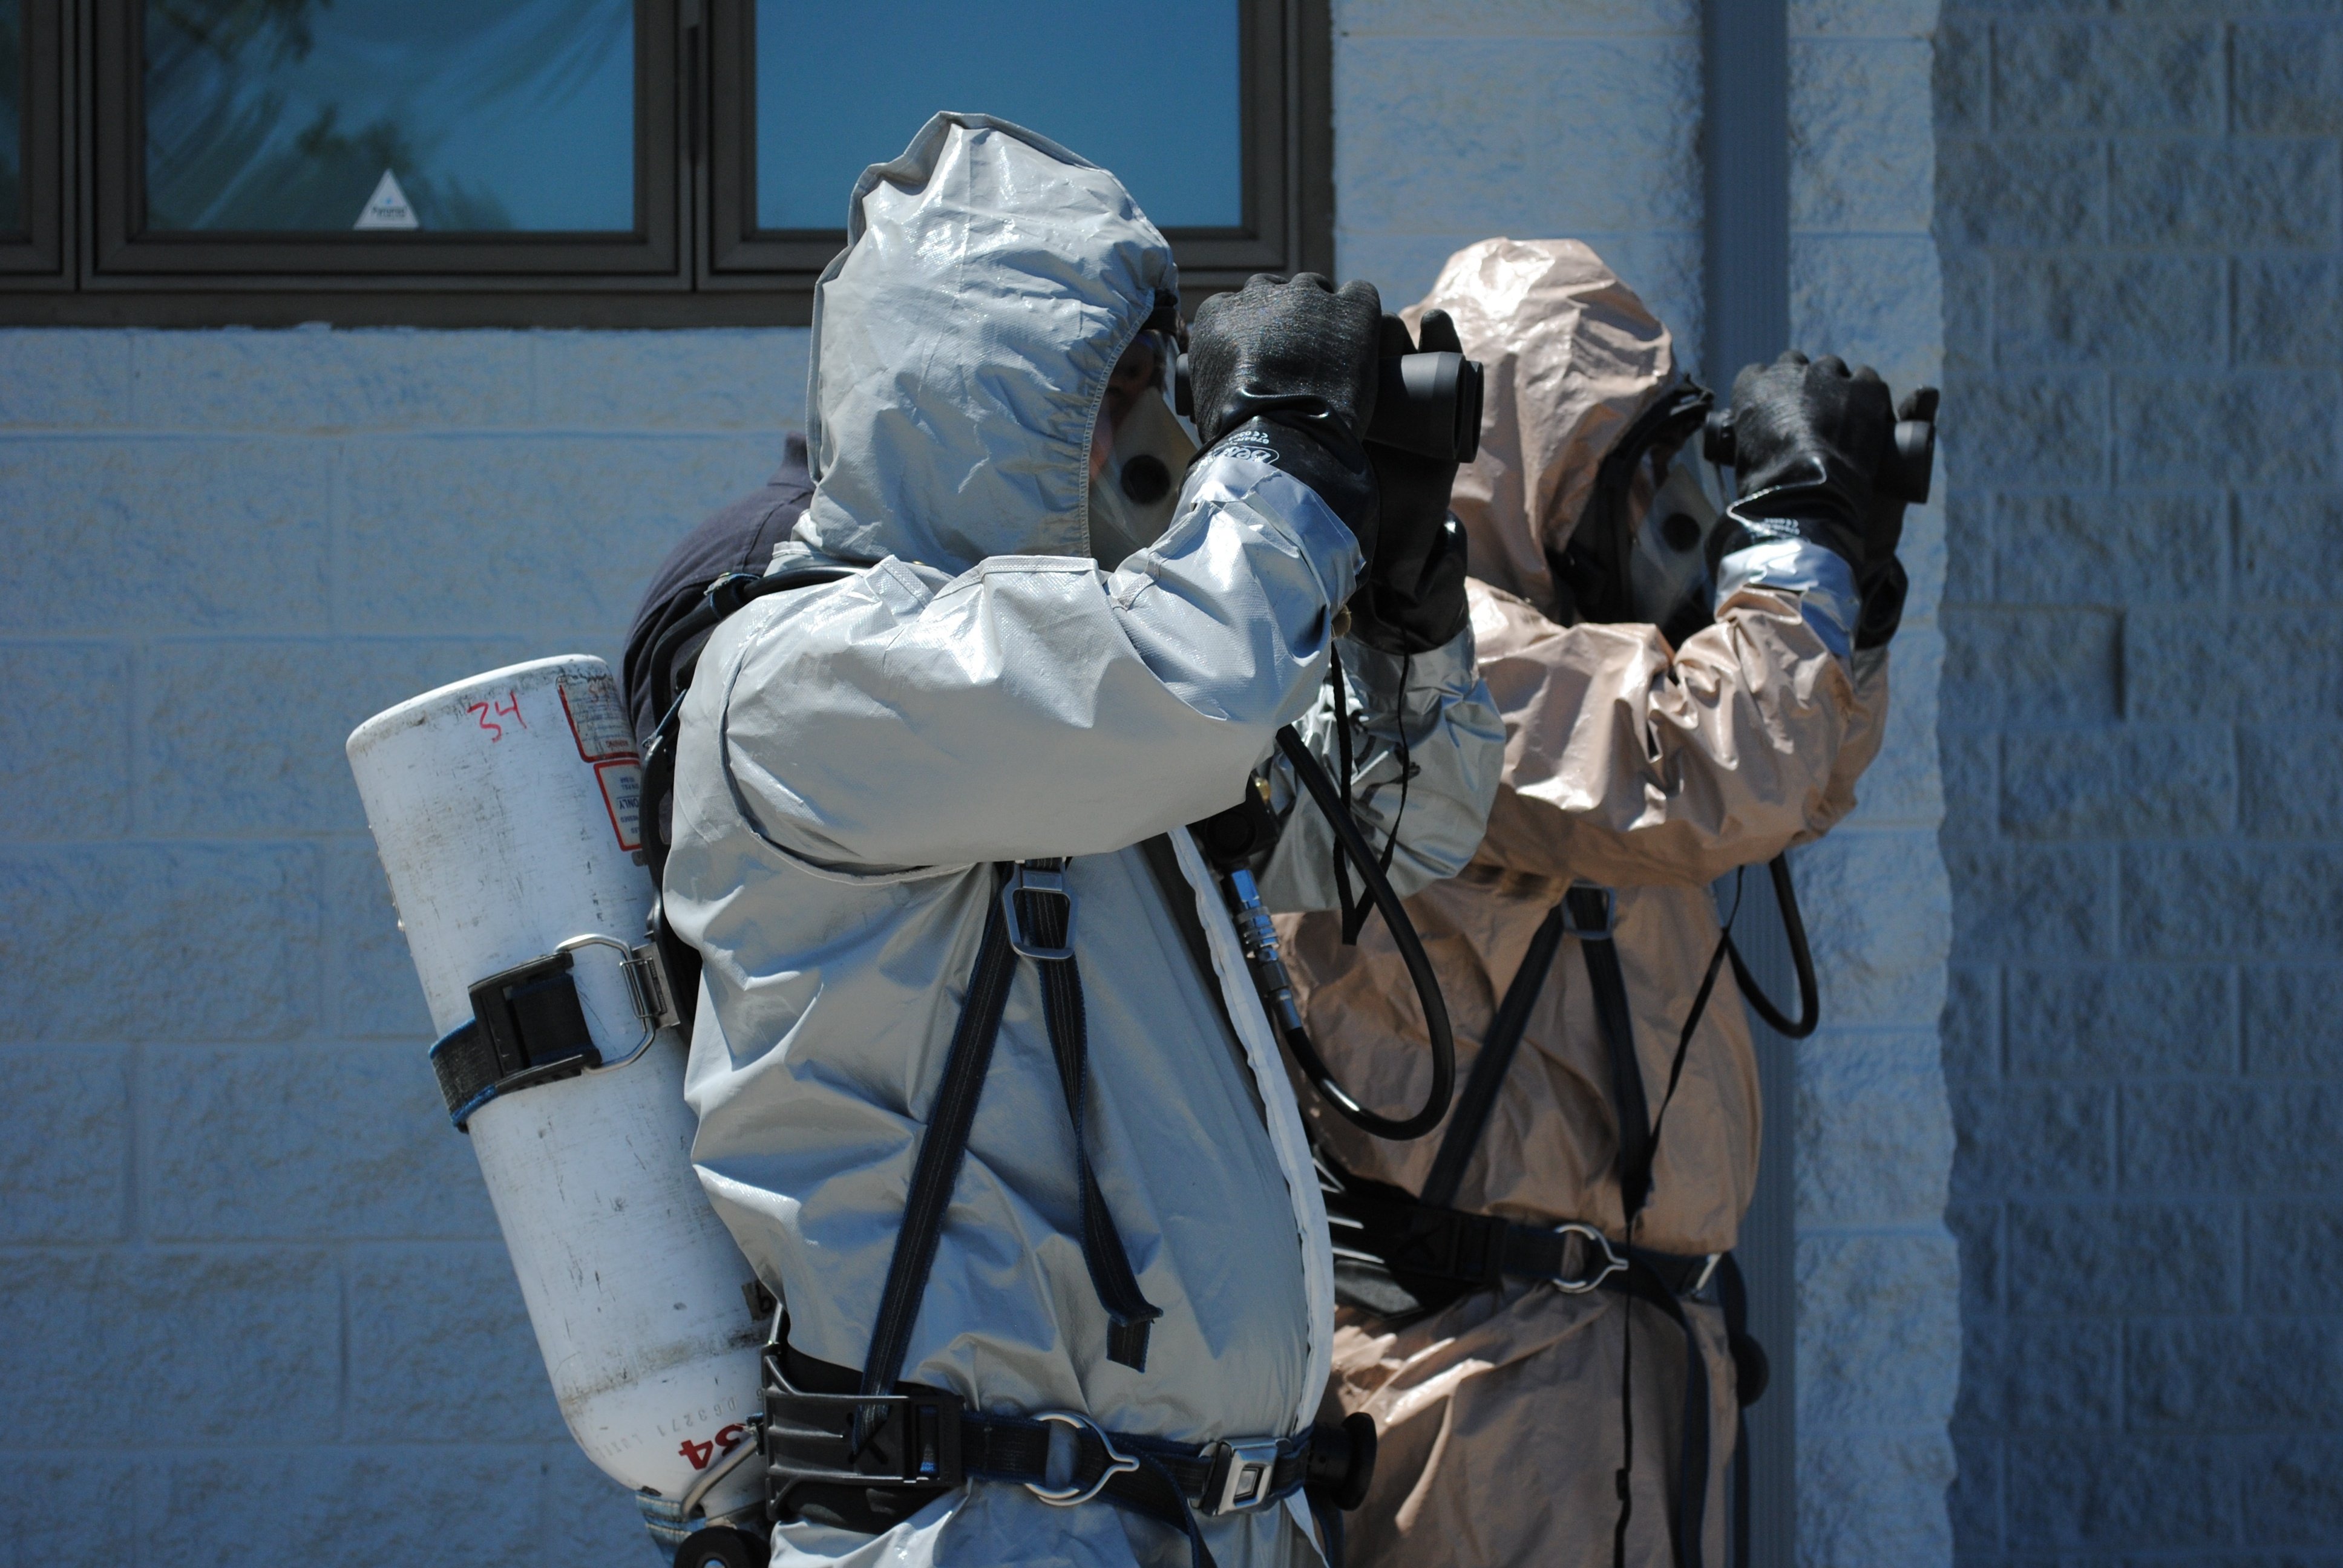 OSHA students in hazmat suits using binoculars during a training